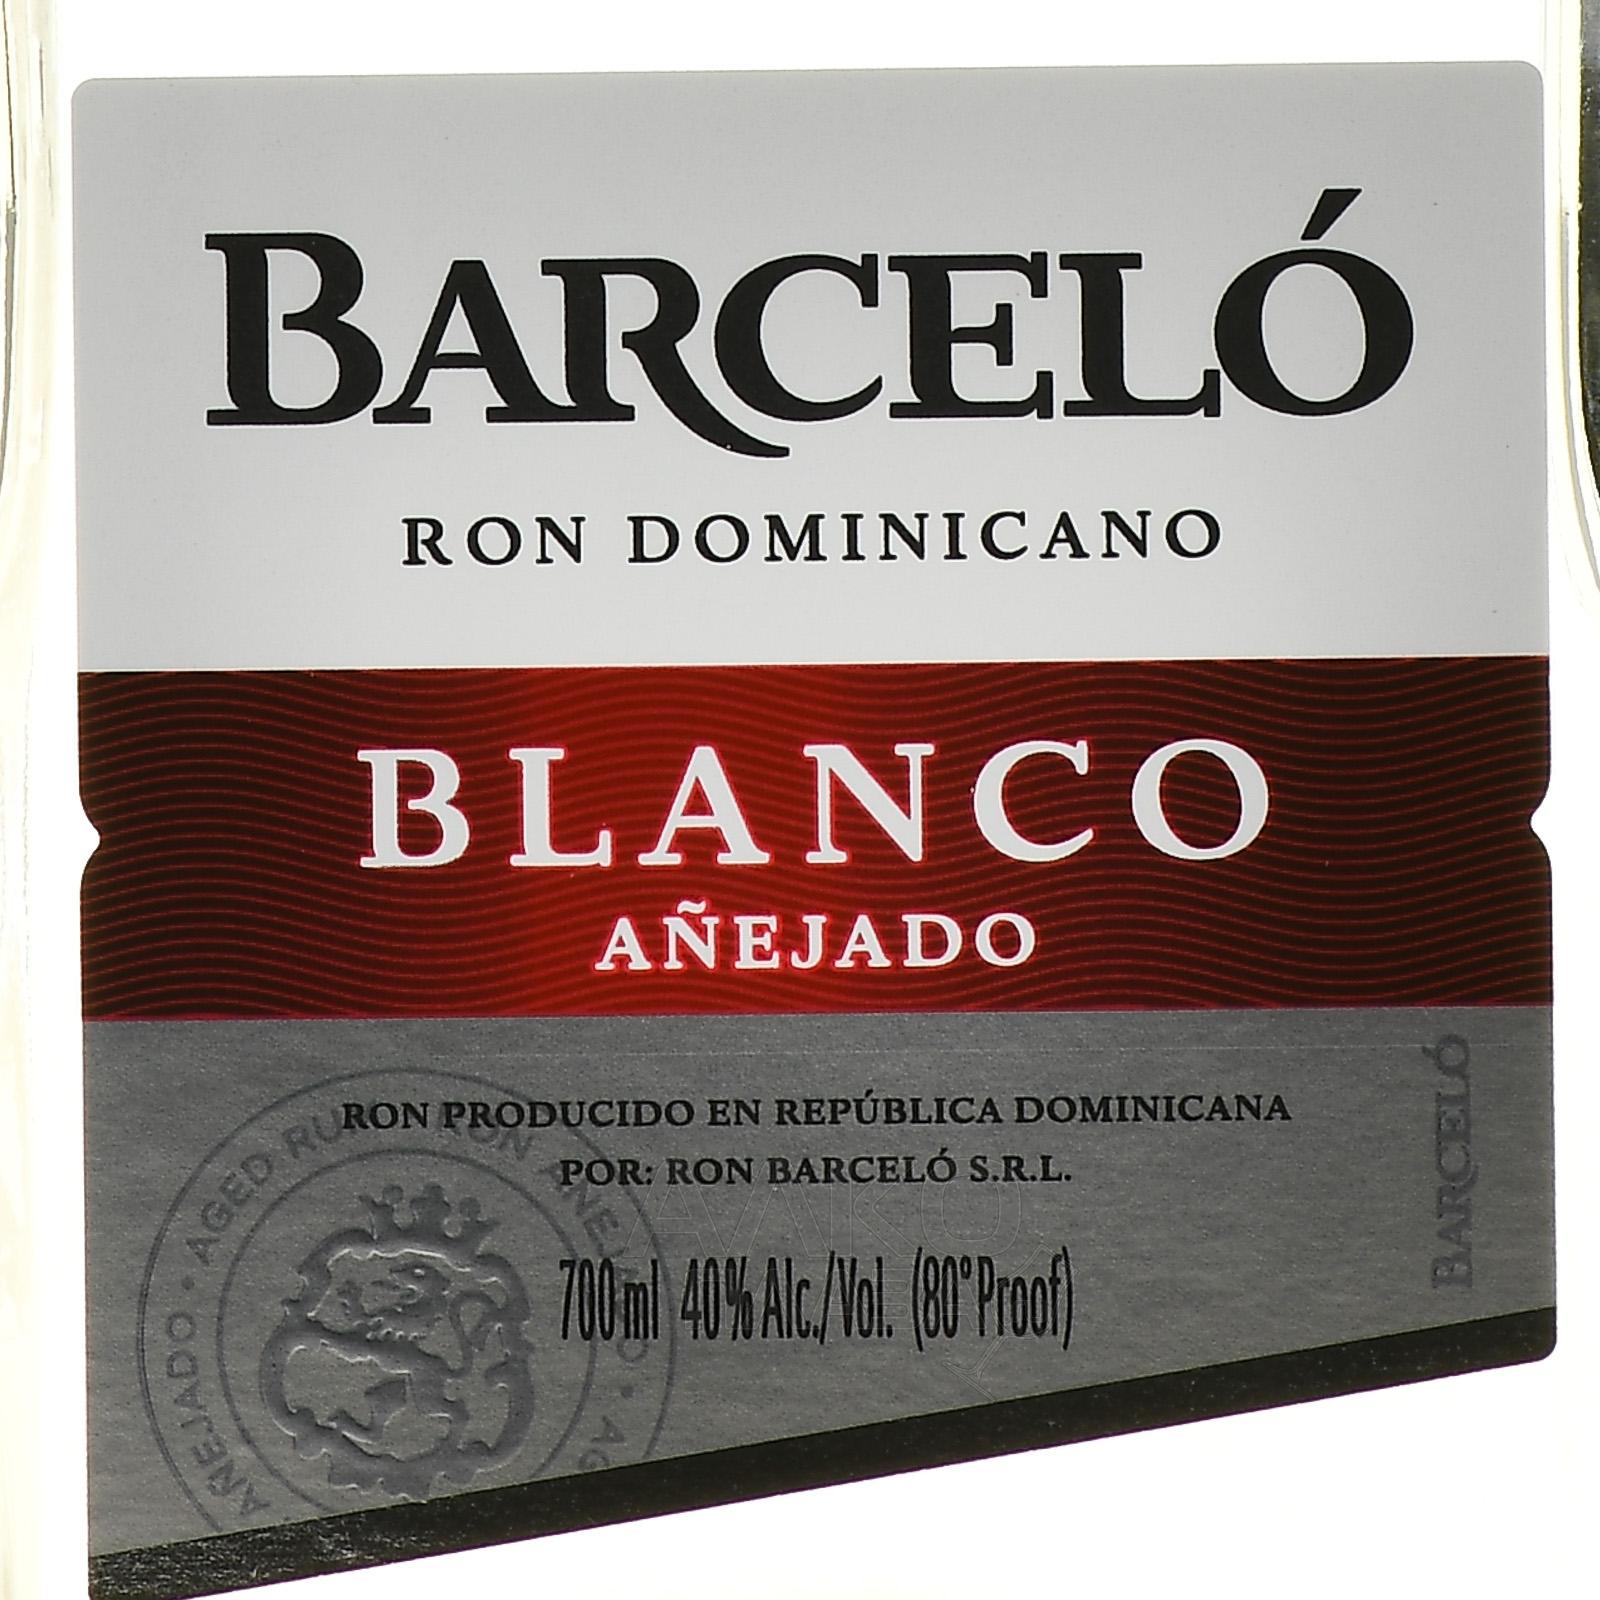 Barcelo imperial 0.7 цена